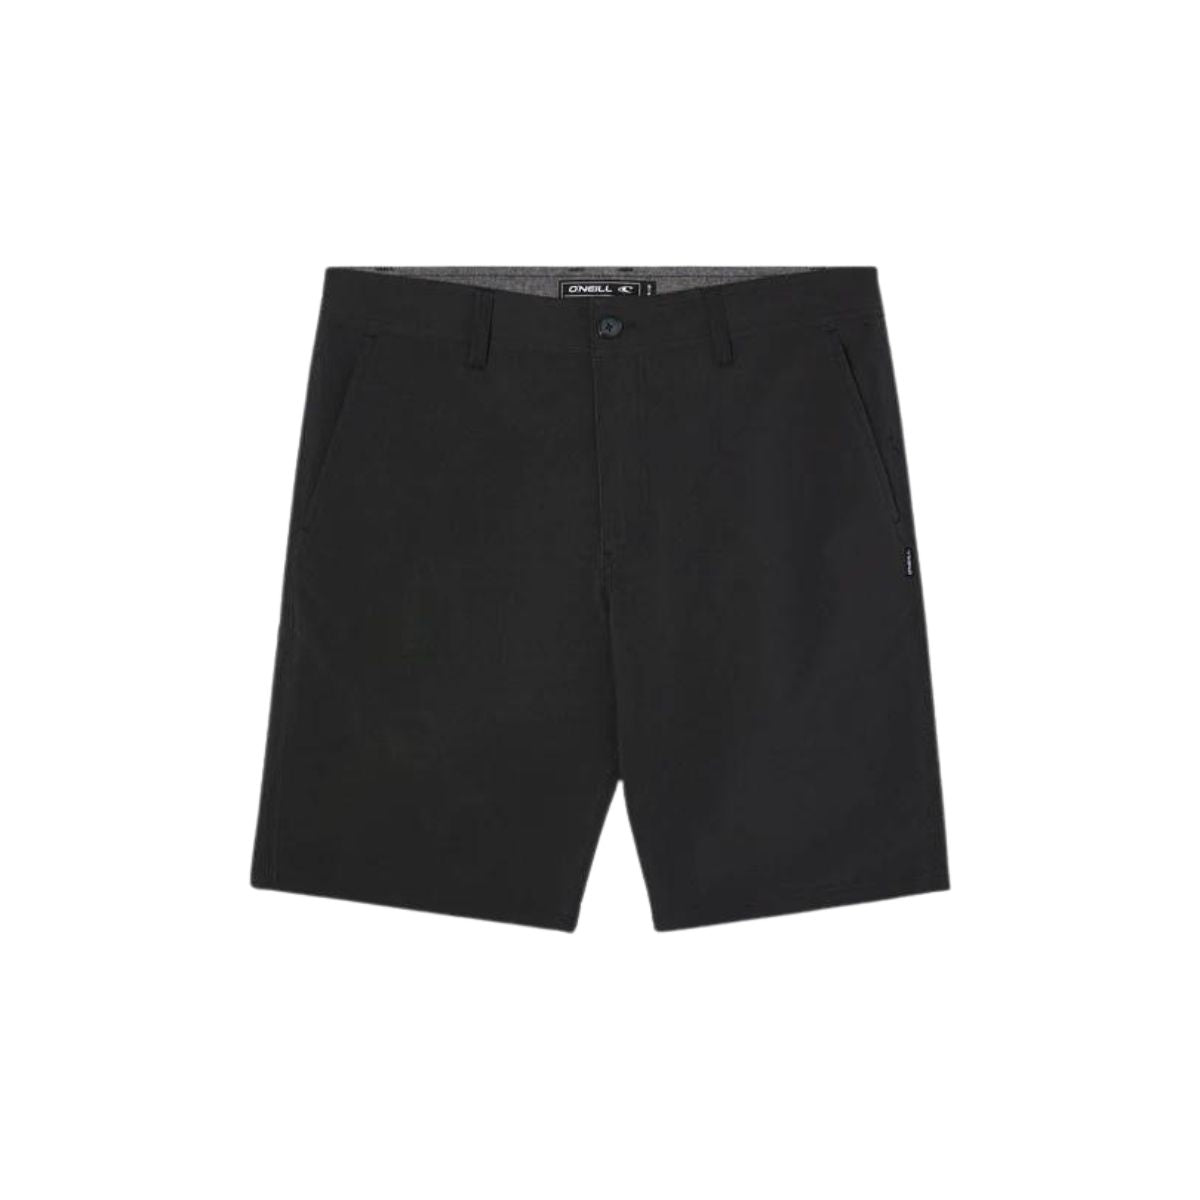 O'Neill Stockton 20" Hybrid Shorts in Black - BoardCo